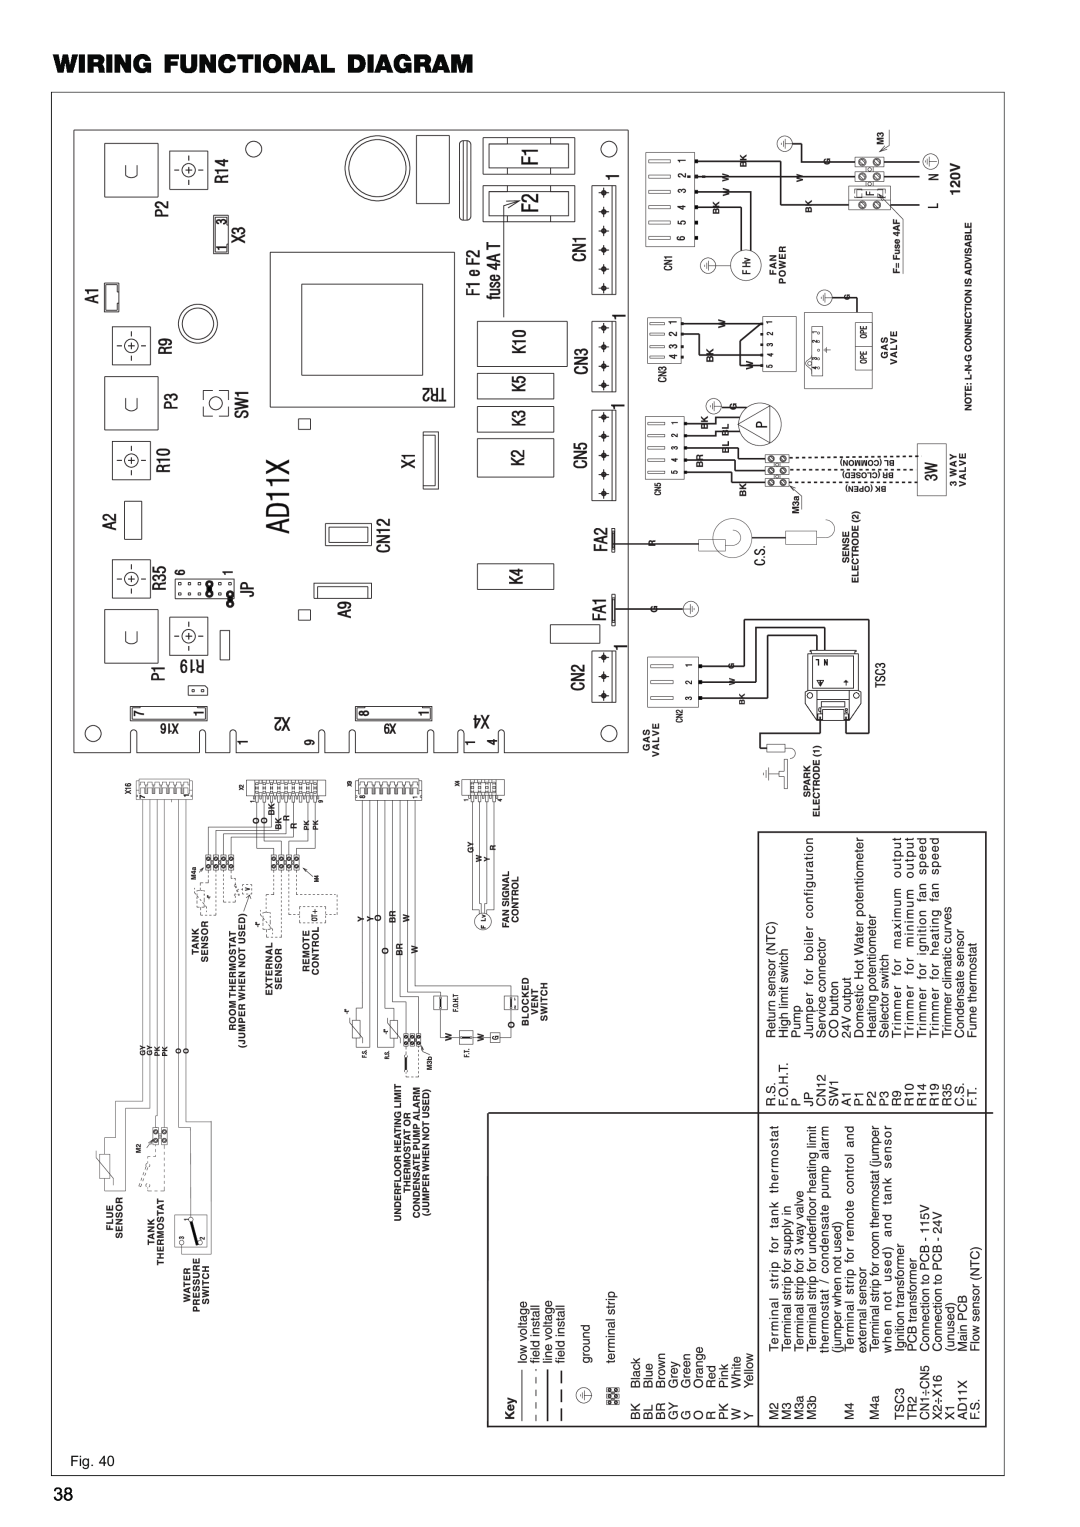 Raypak 85, 120 manual Wiring Functional Diagram, Fig 